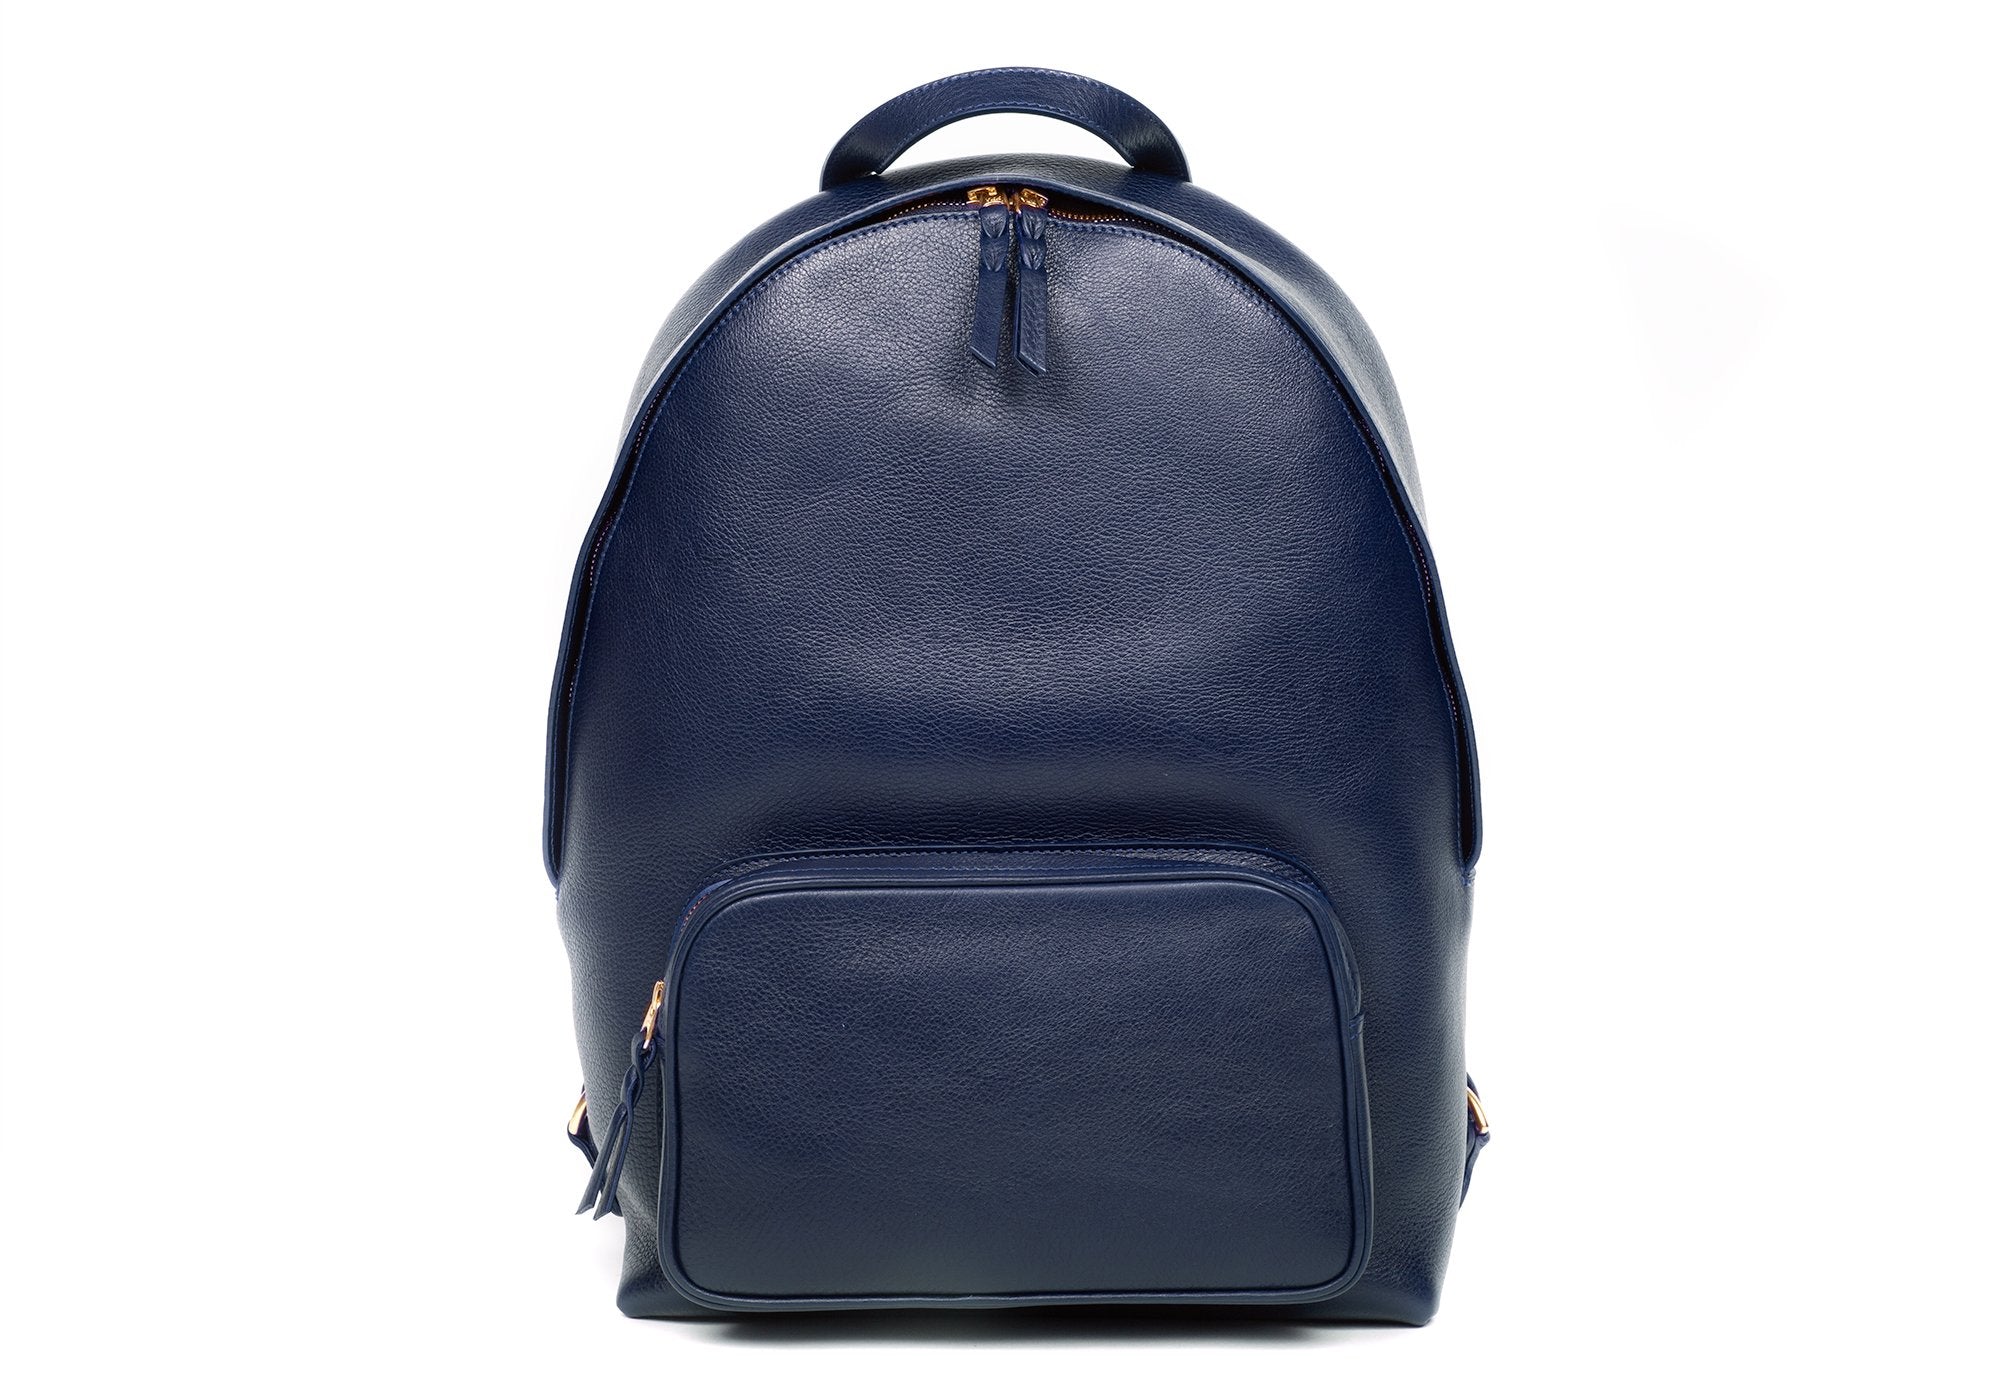 BATE PU Leather Backpack Purse for Women Casual Travel Handbag Ladies  Shoulder Bags Black - Walmart.com